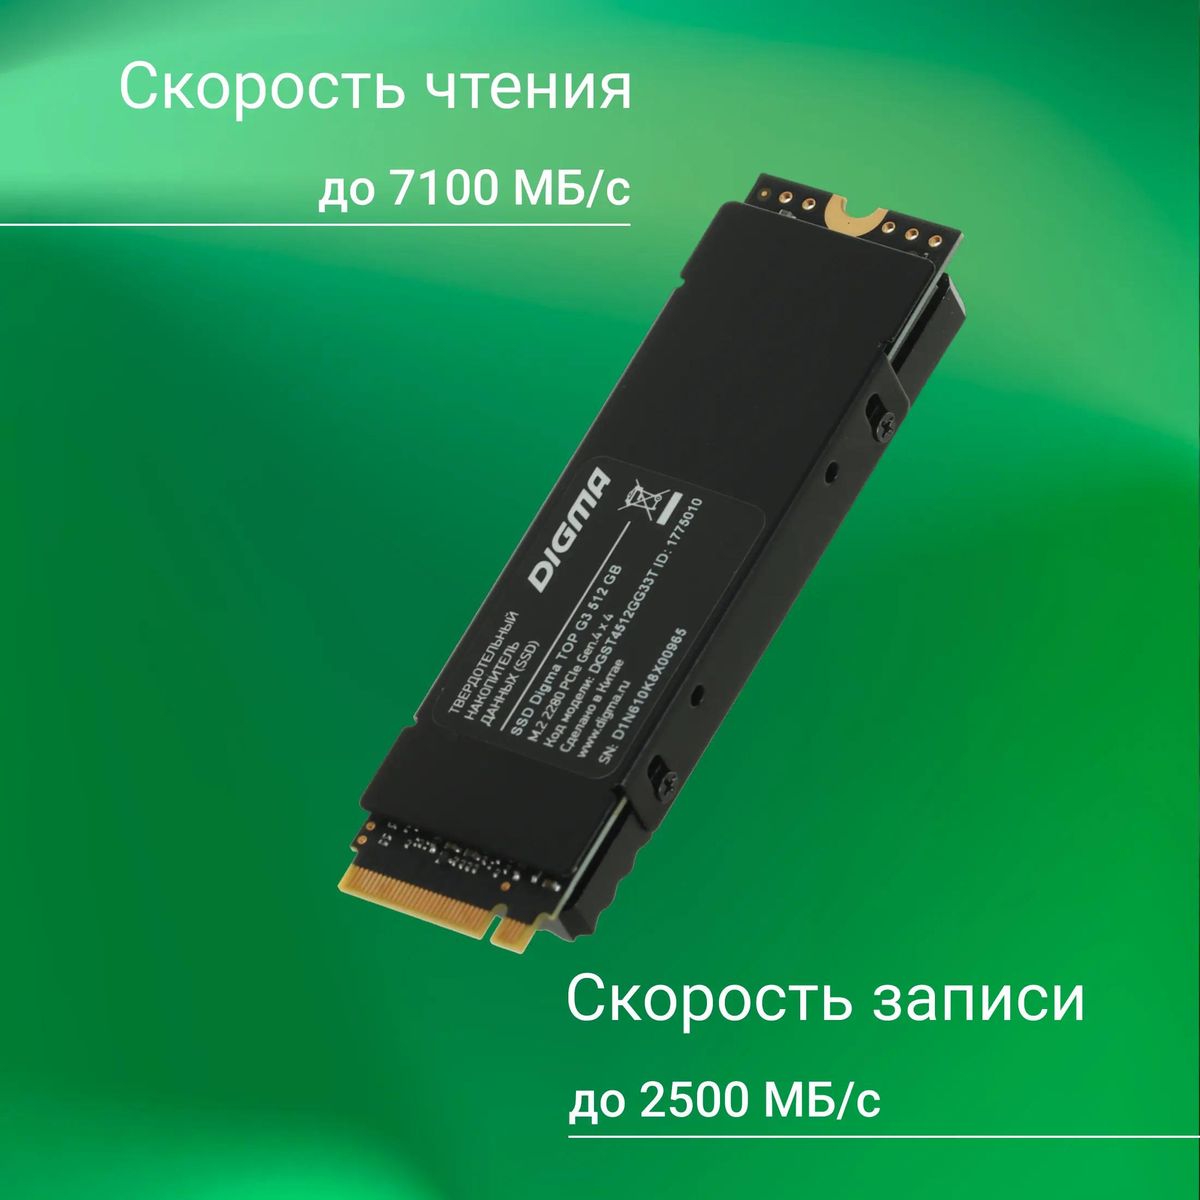 SSD накопитель Digma Top G3 DGST4512GG33T 512ГБ